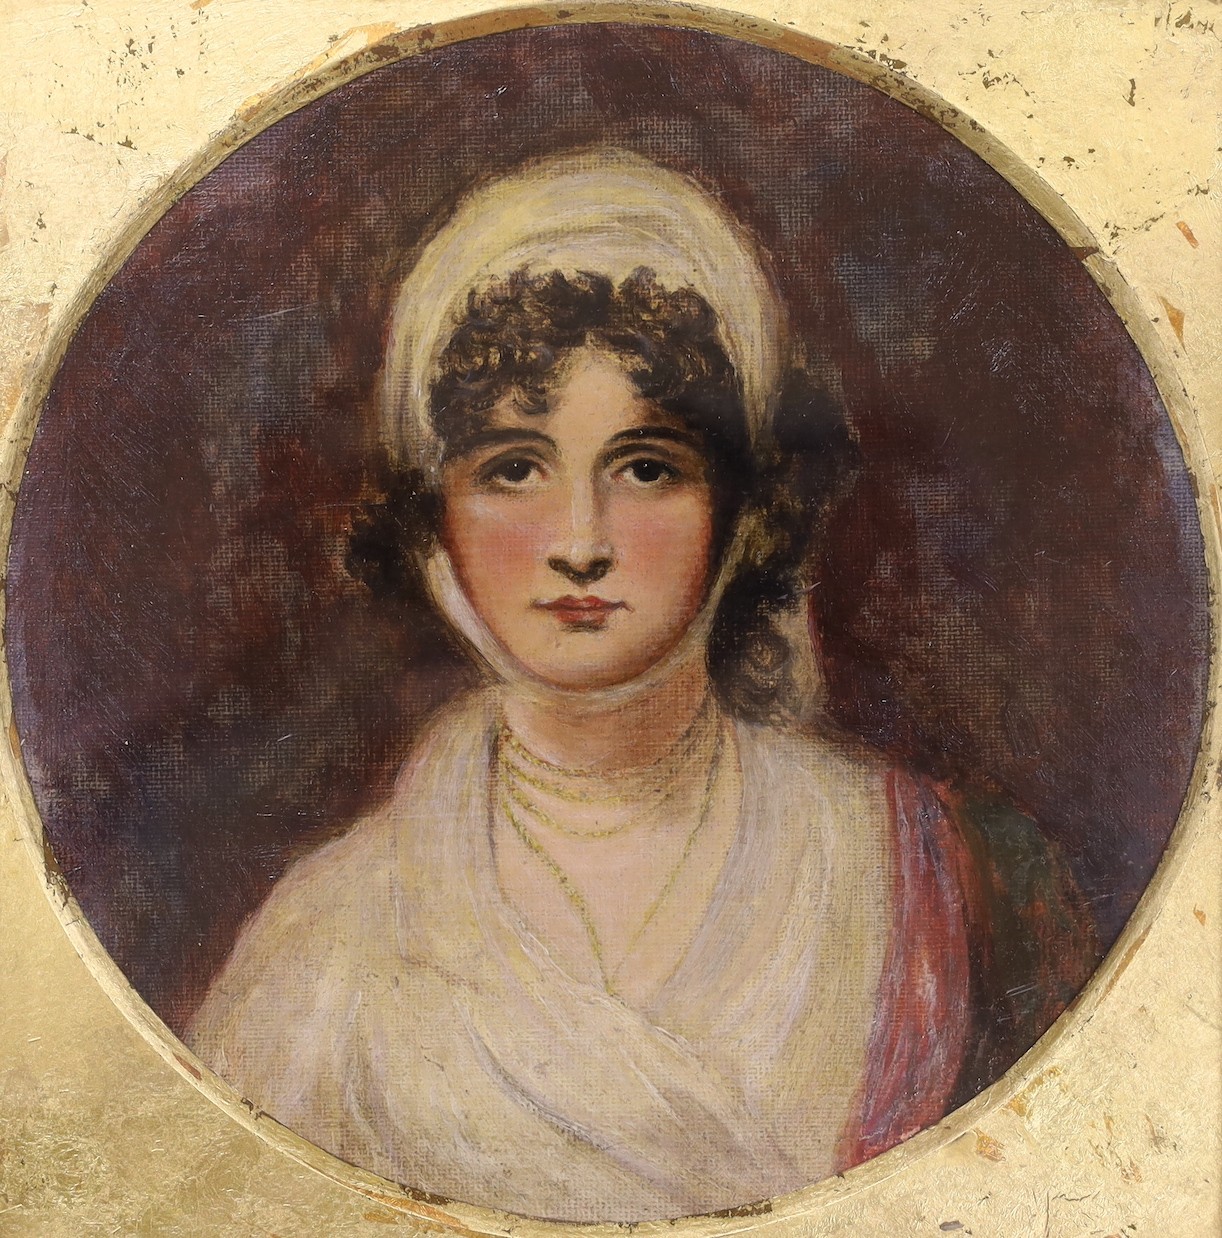 19th century English School, oil on canvas laid on board, Portrait of a lady, tondo, 20cm